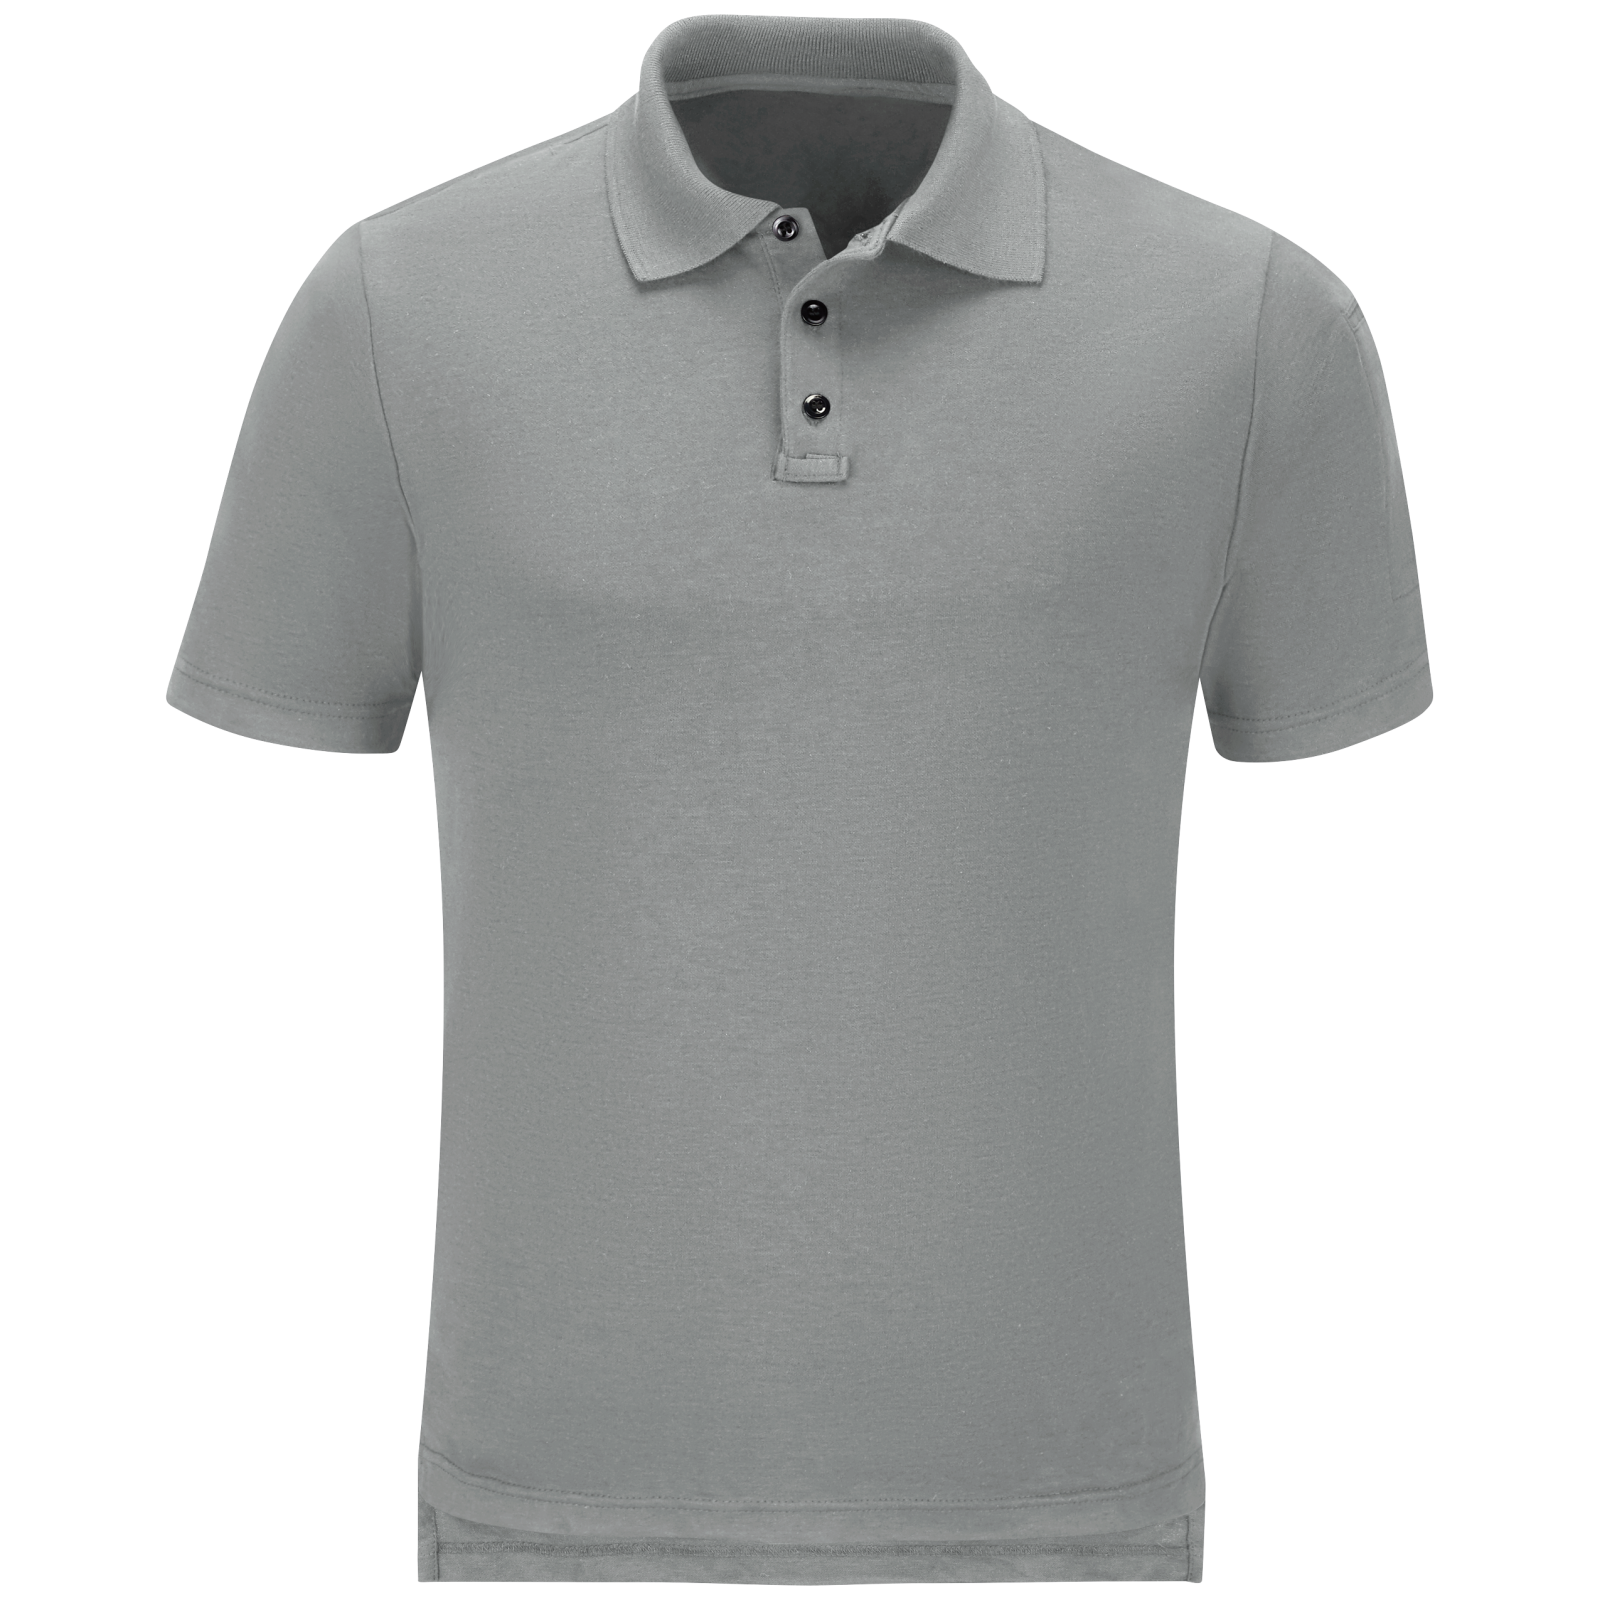 Download Men's Short Sleeve Station Wear Polo Shirt | Workrite ...